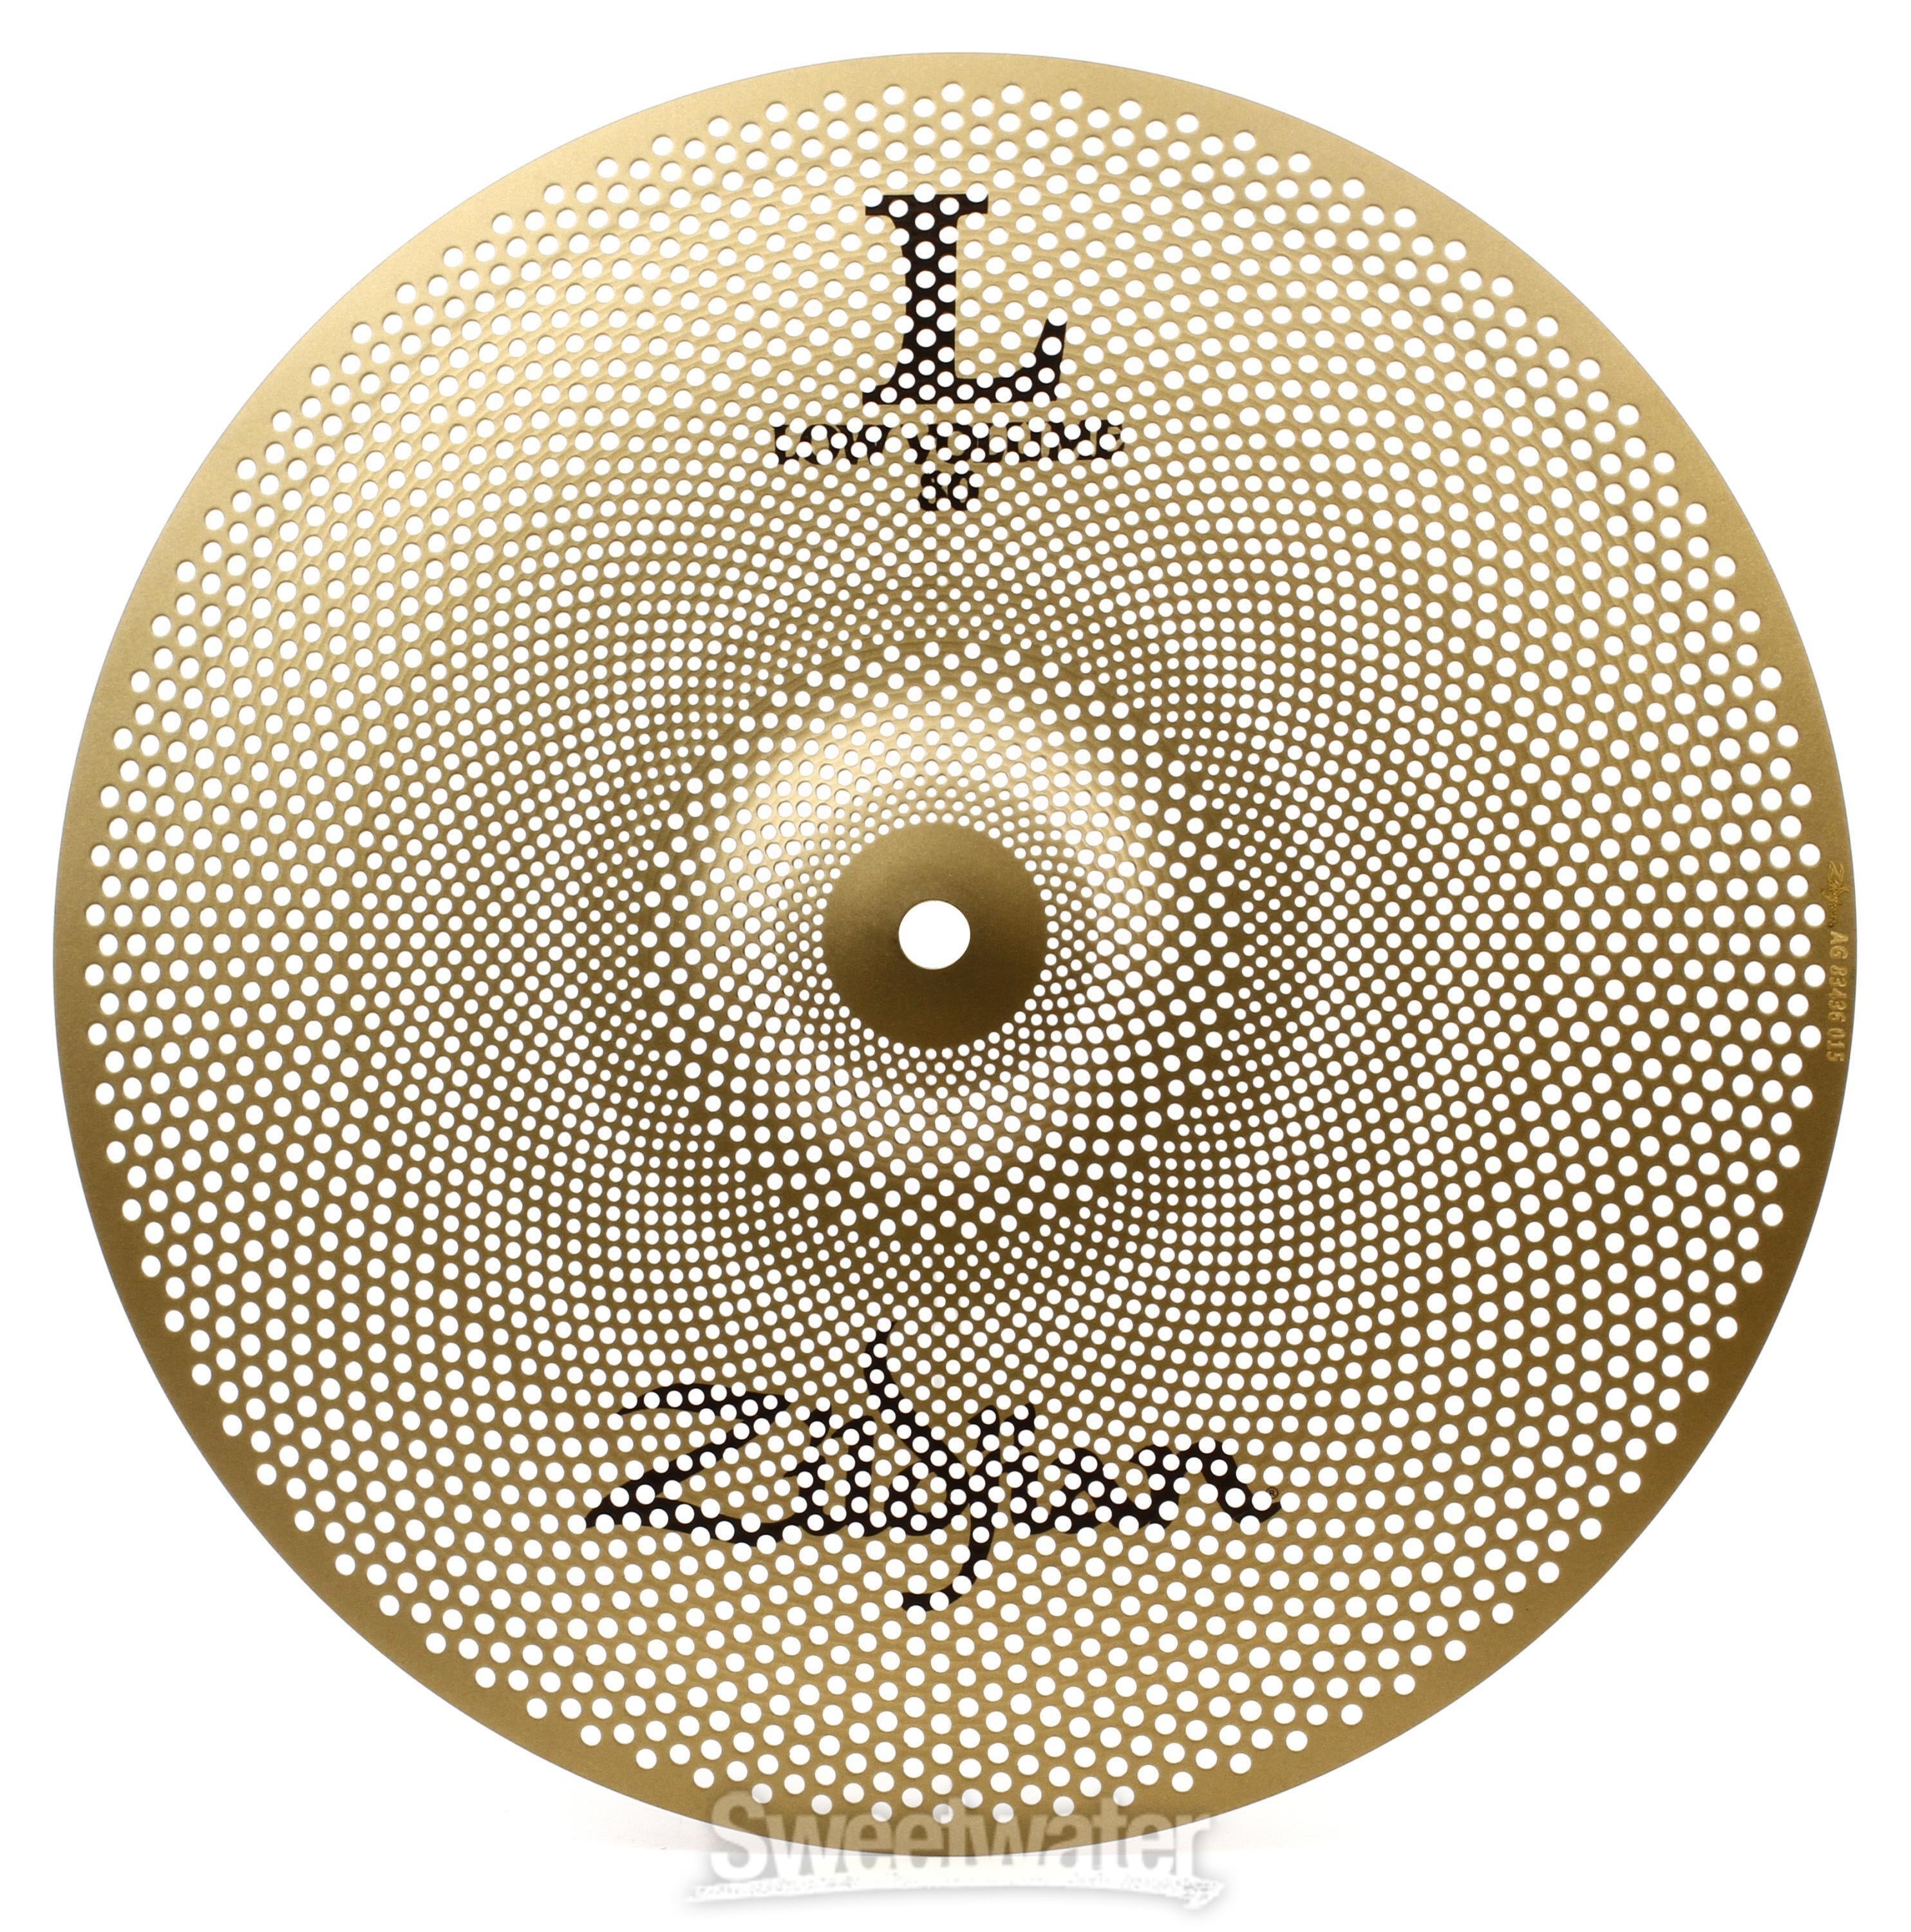 Zildjian L80 Low Volume Cymbal Set - 13/14/18 inch